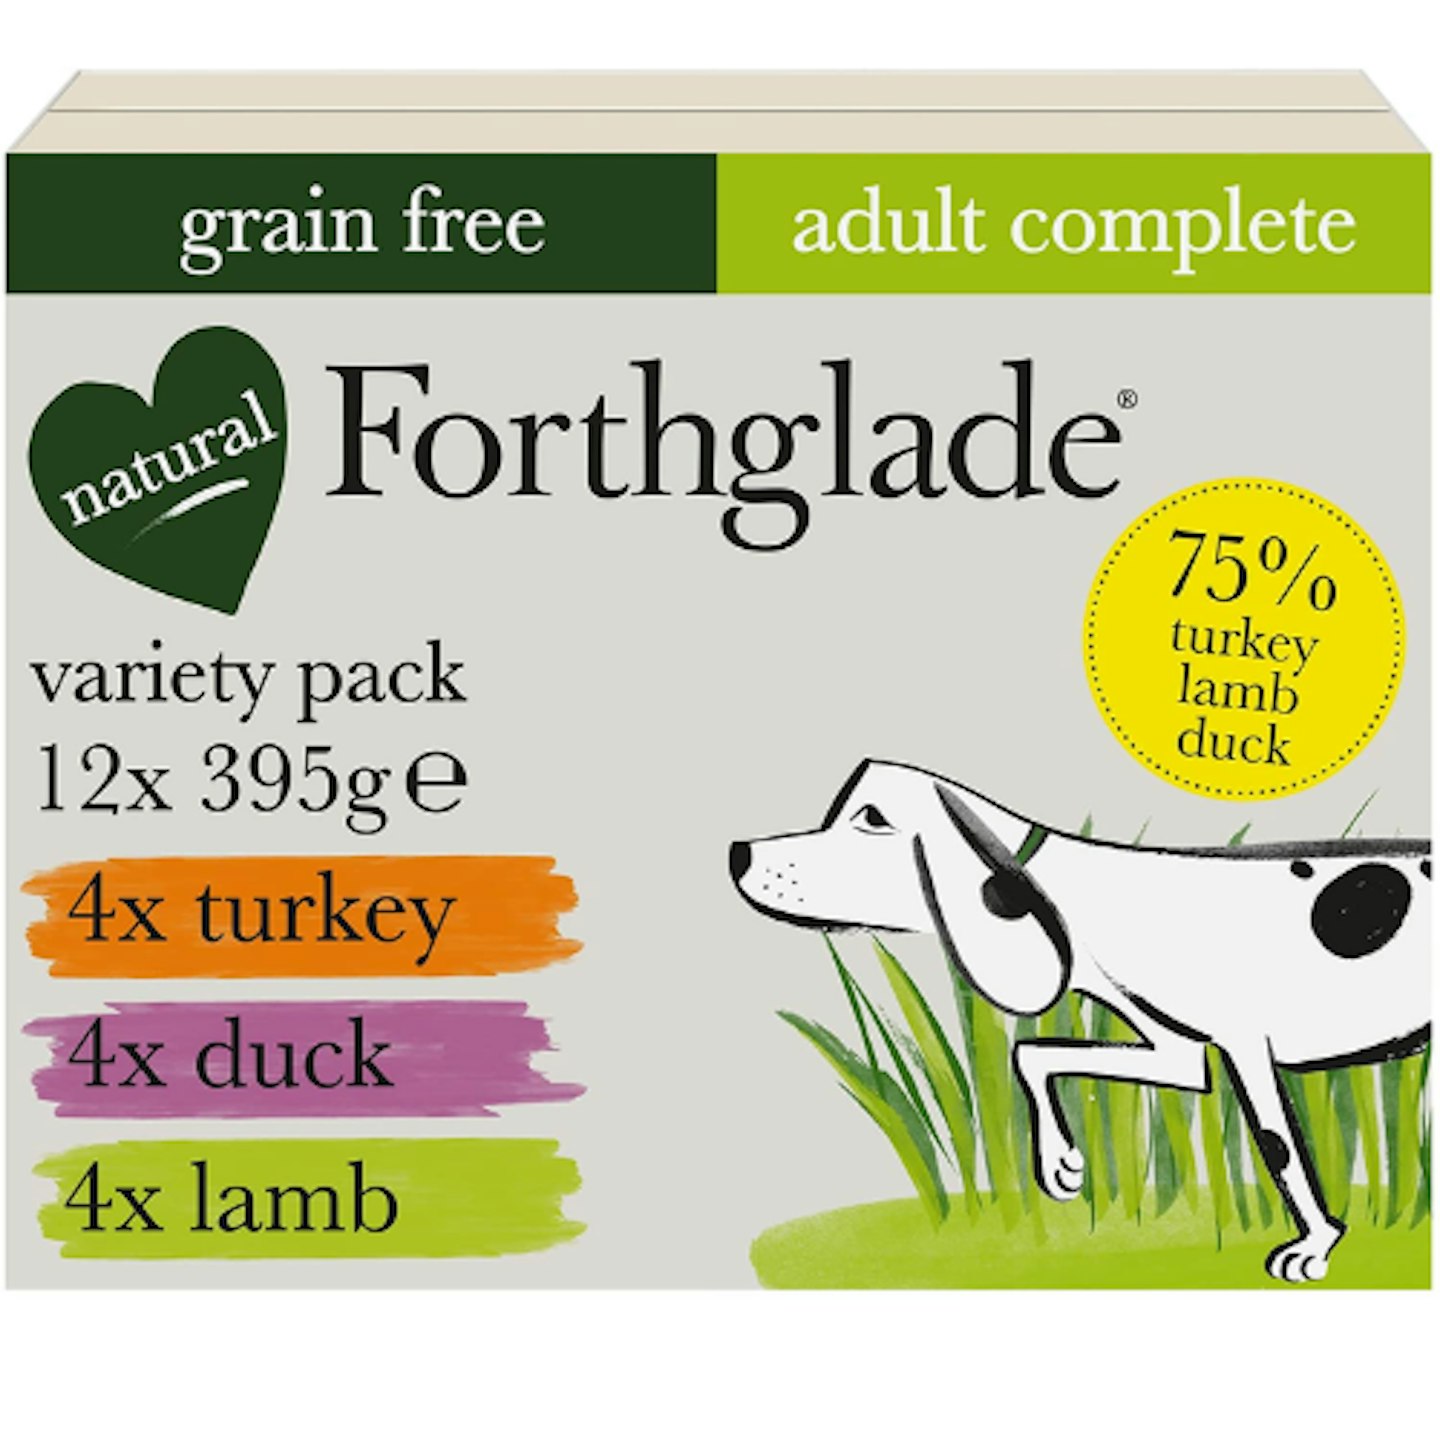 Forthglade Natural Grain Free Complete Wet Food